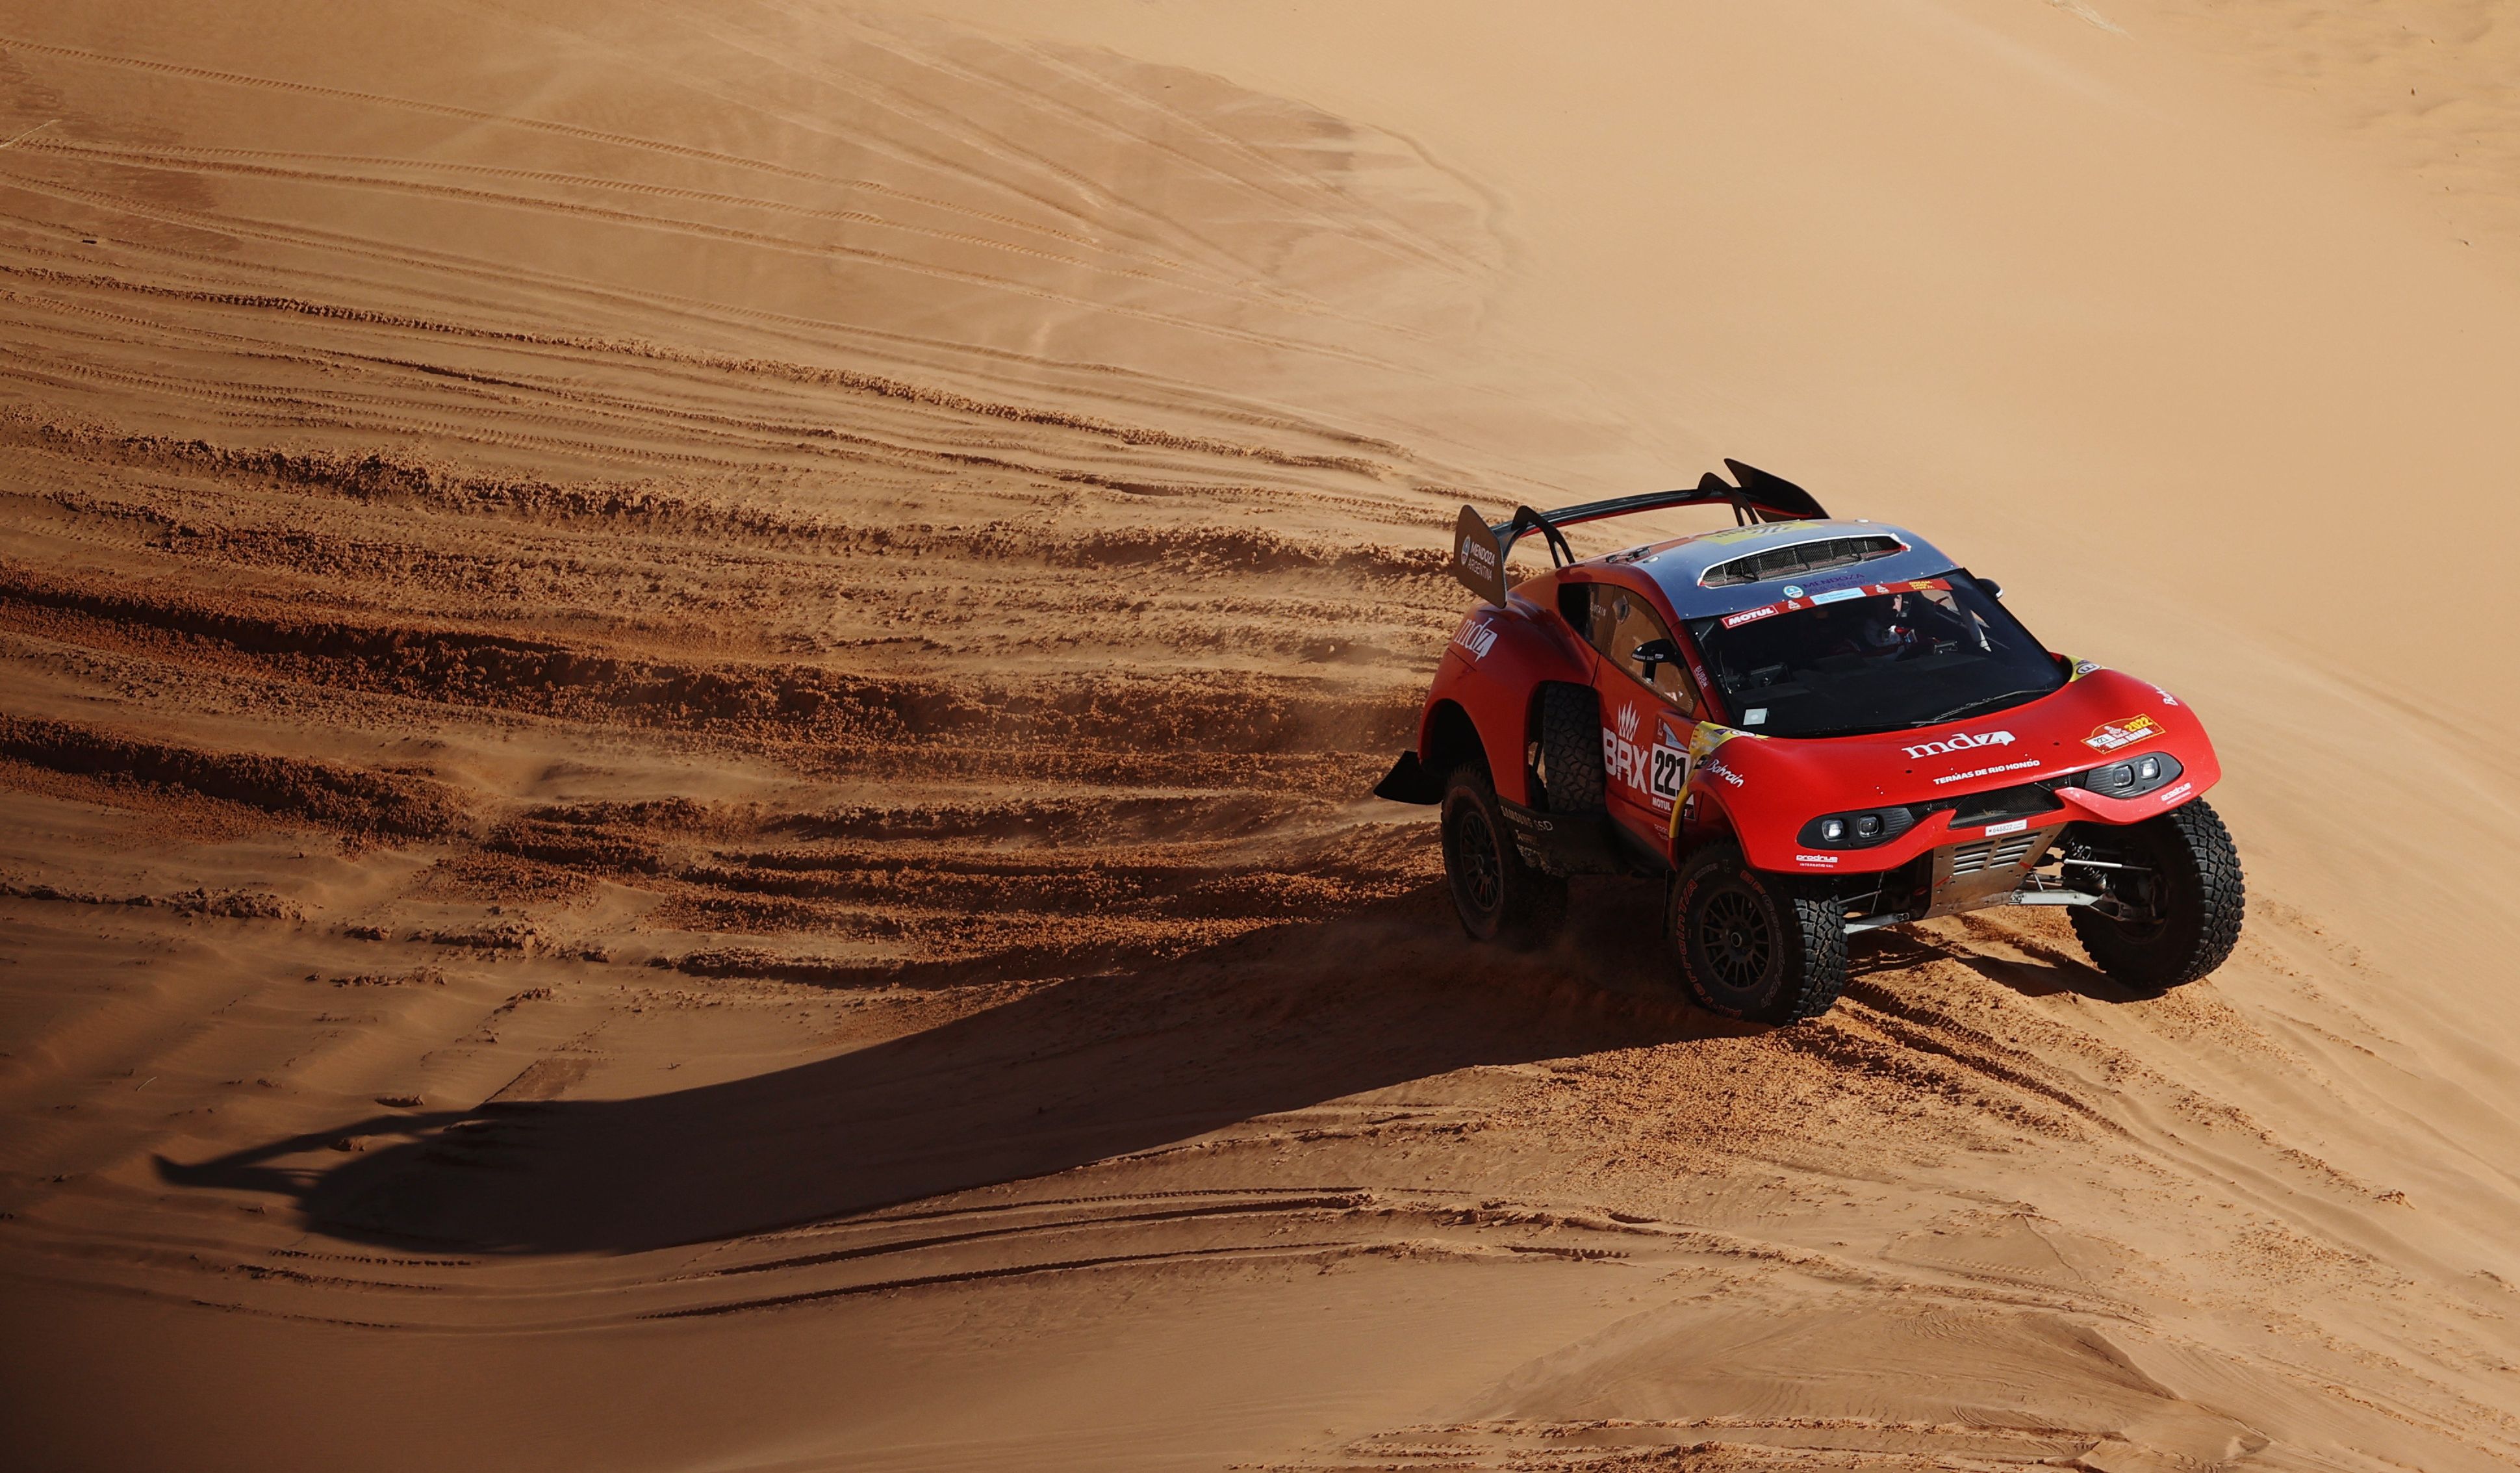 Orlando Terranova ganó una etapa en el Rally Dakar luego de ocho años (REUTERS/Hamad I Mohammed)